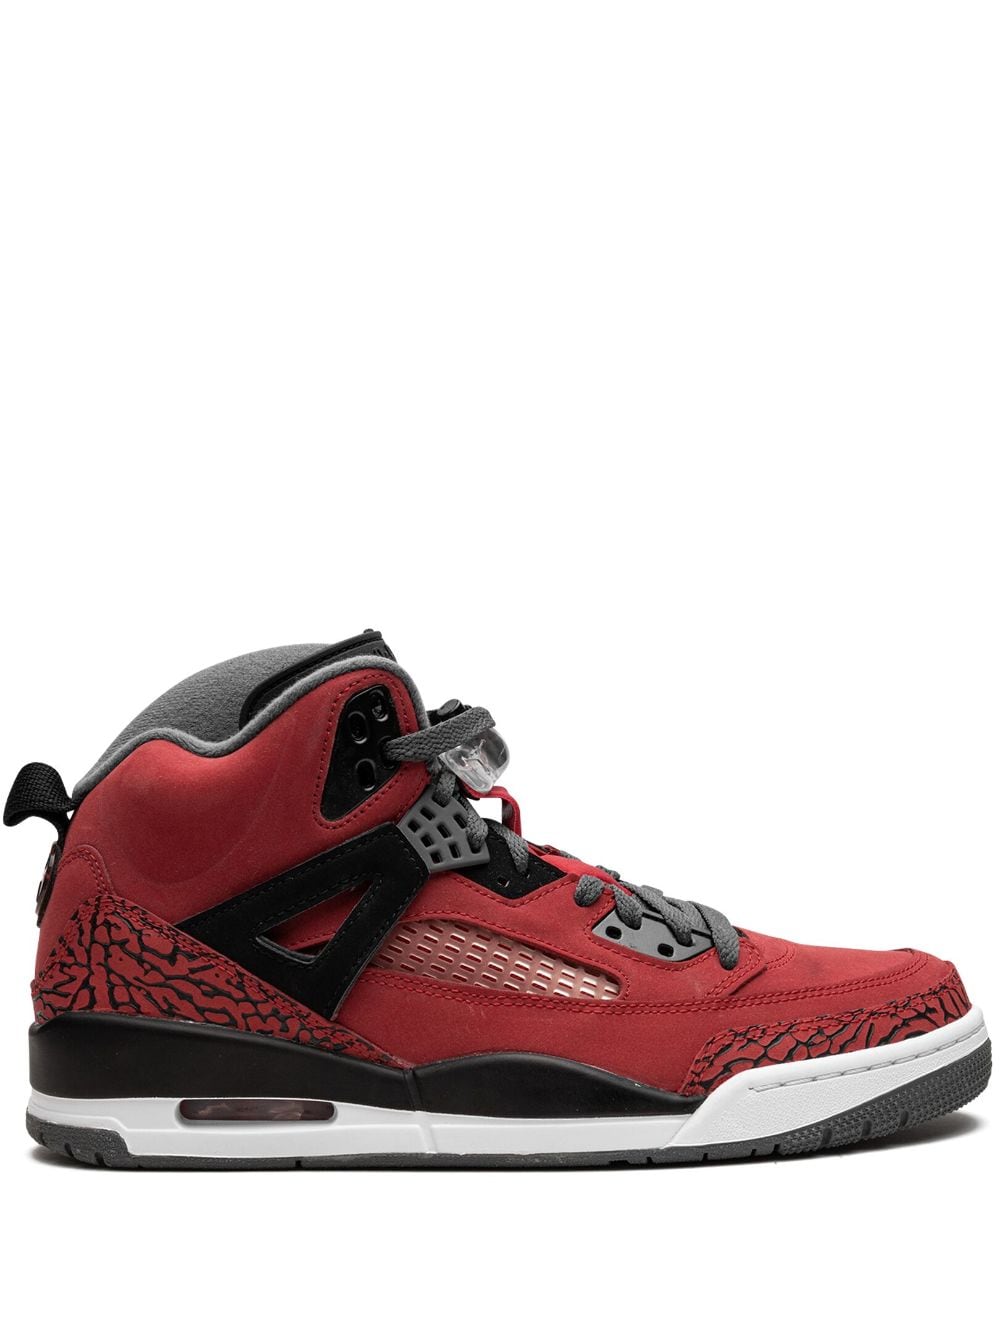 Jordan Spiz'ike high-top sneakers - Red